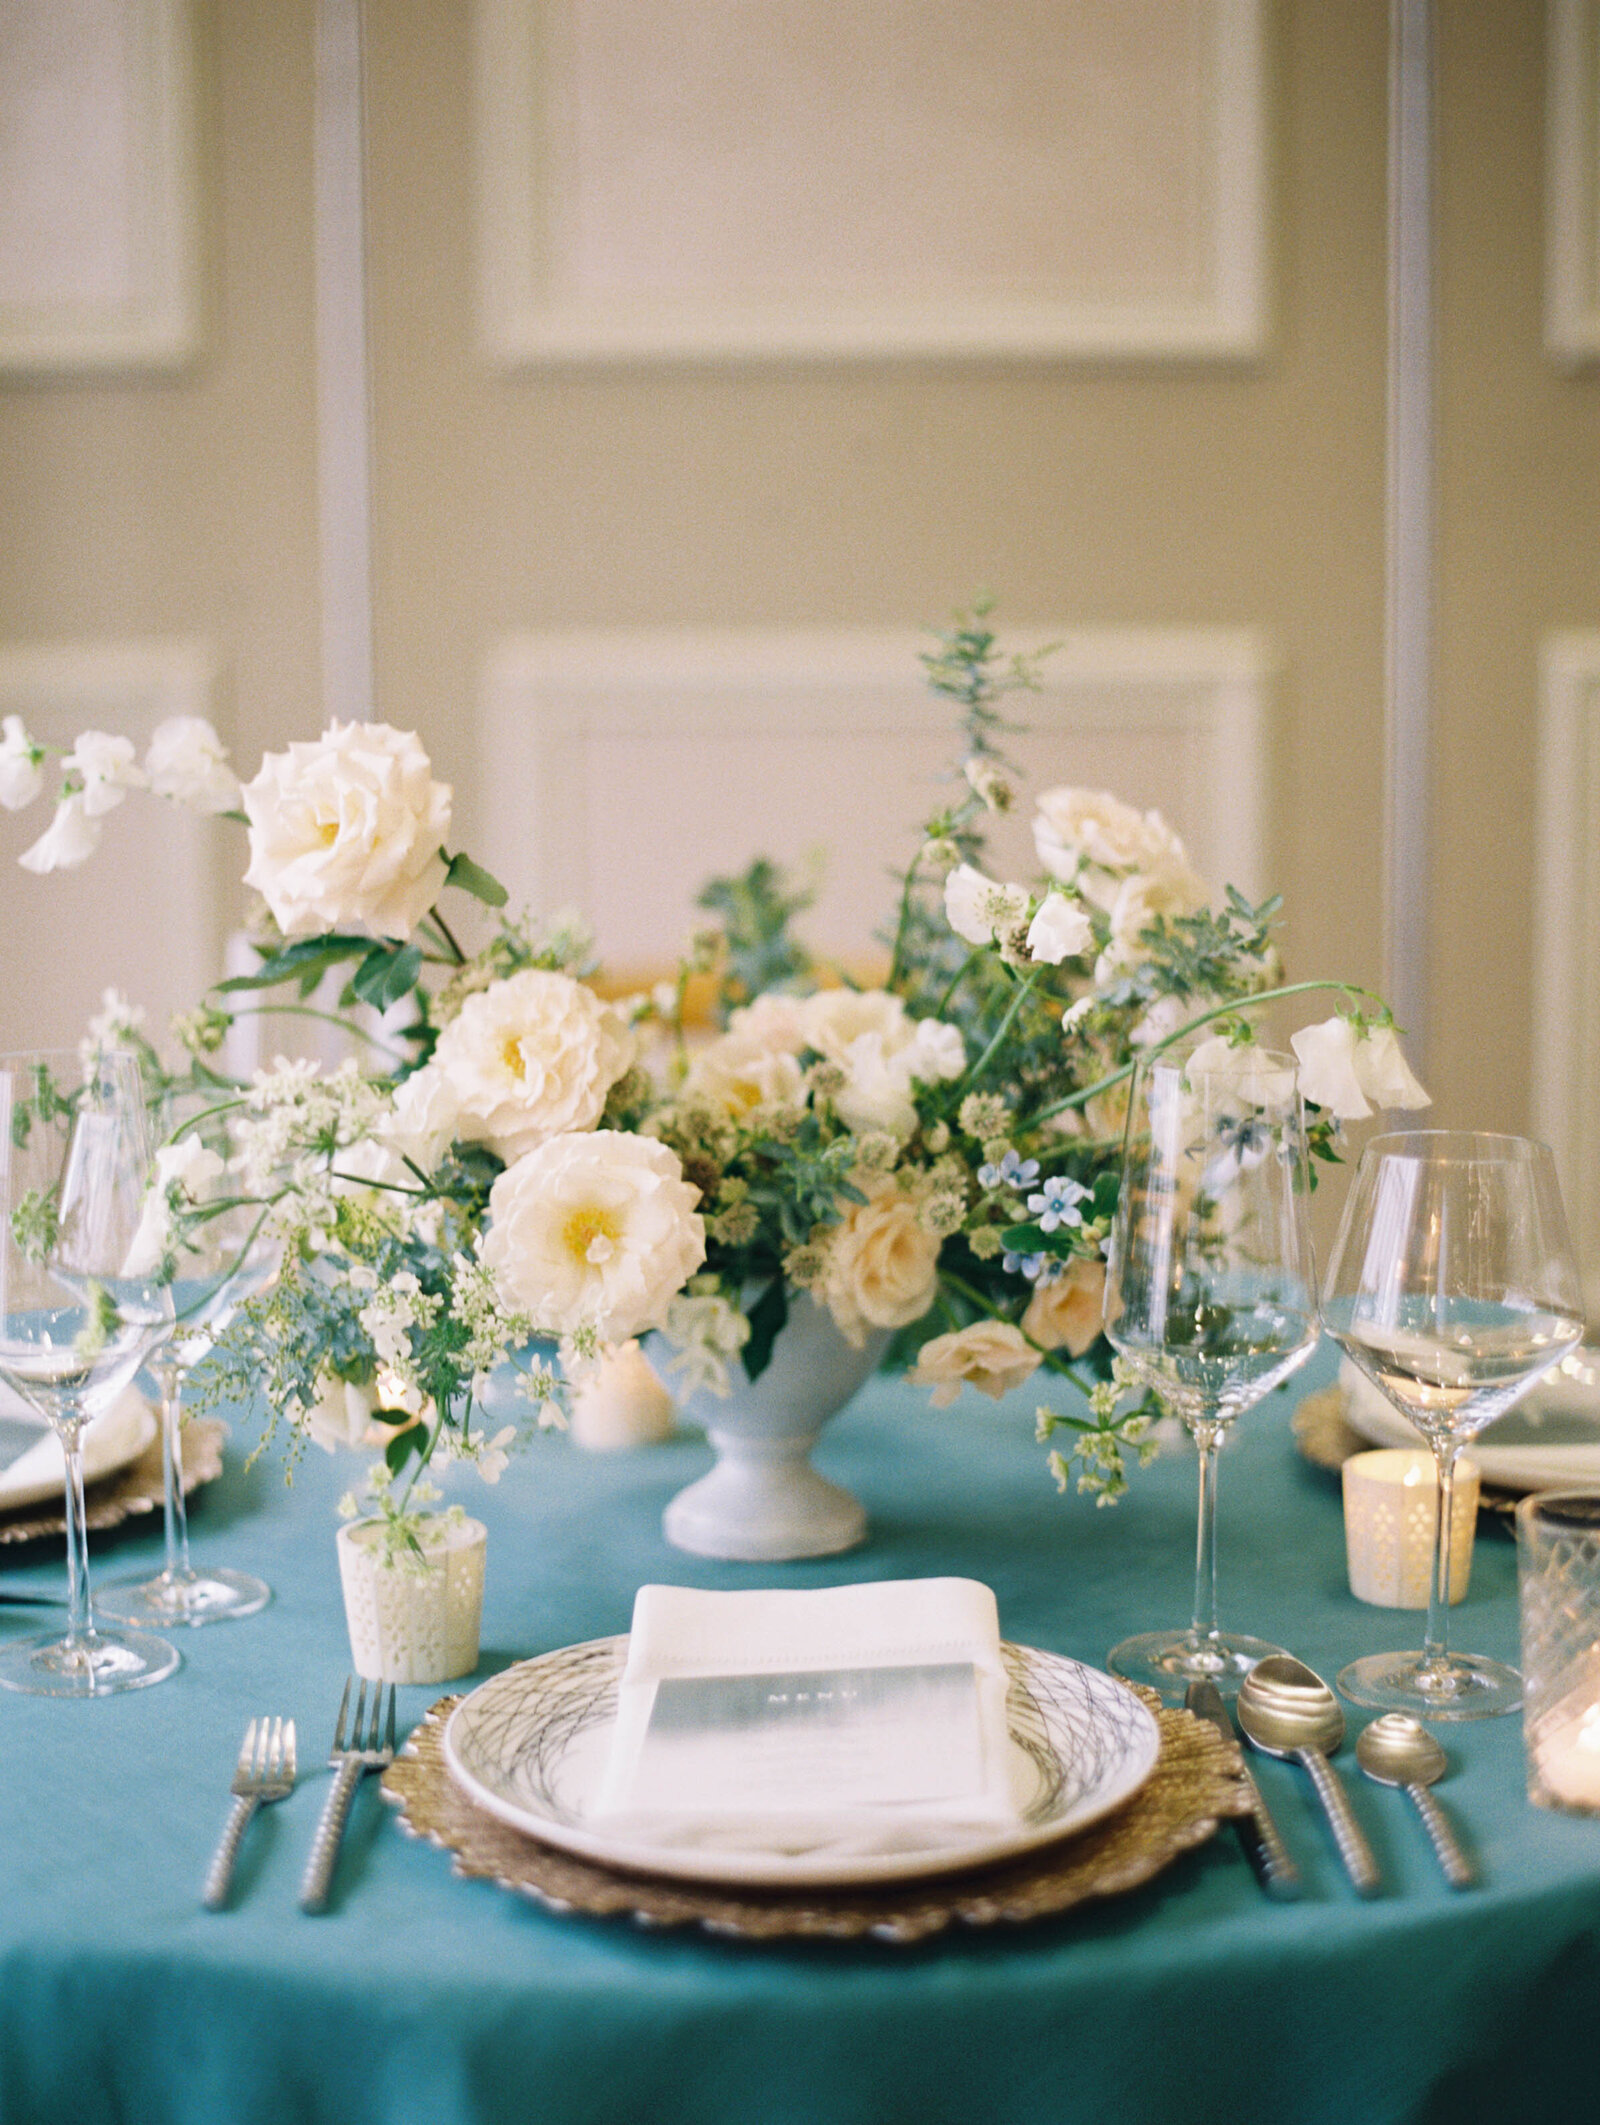 max-owens-design-at-home-floral-arrangements-34-dinner-party